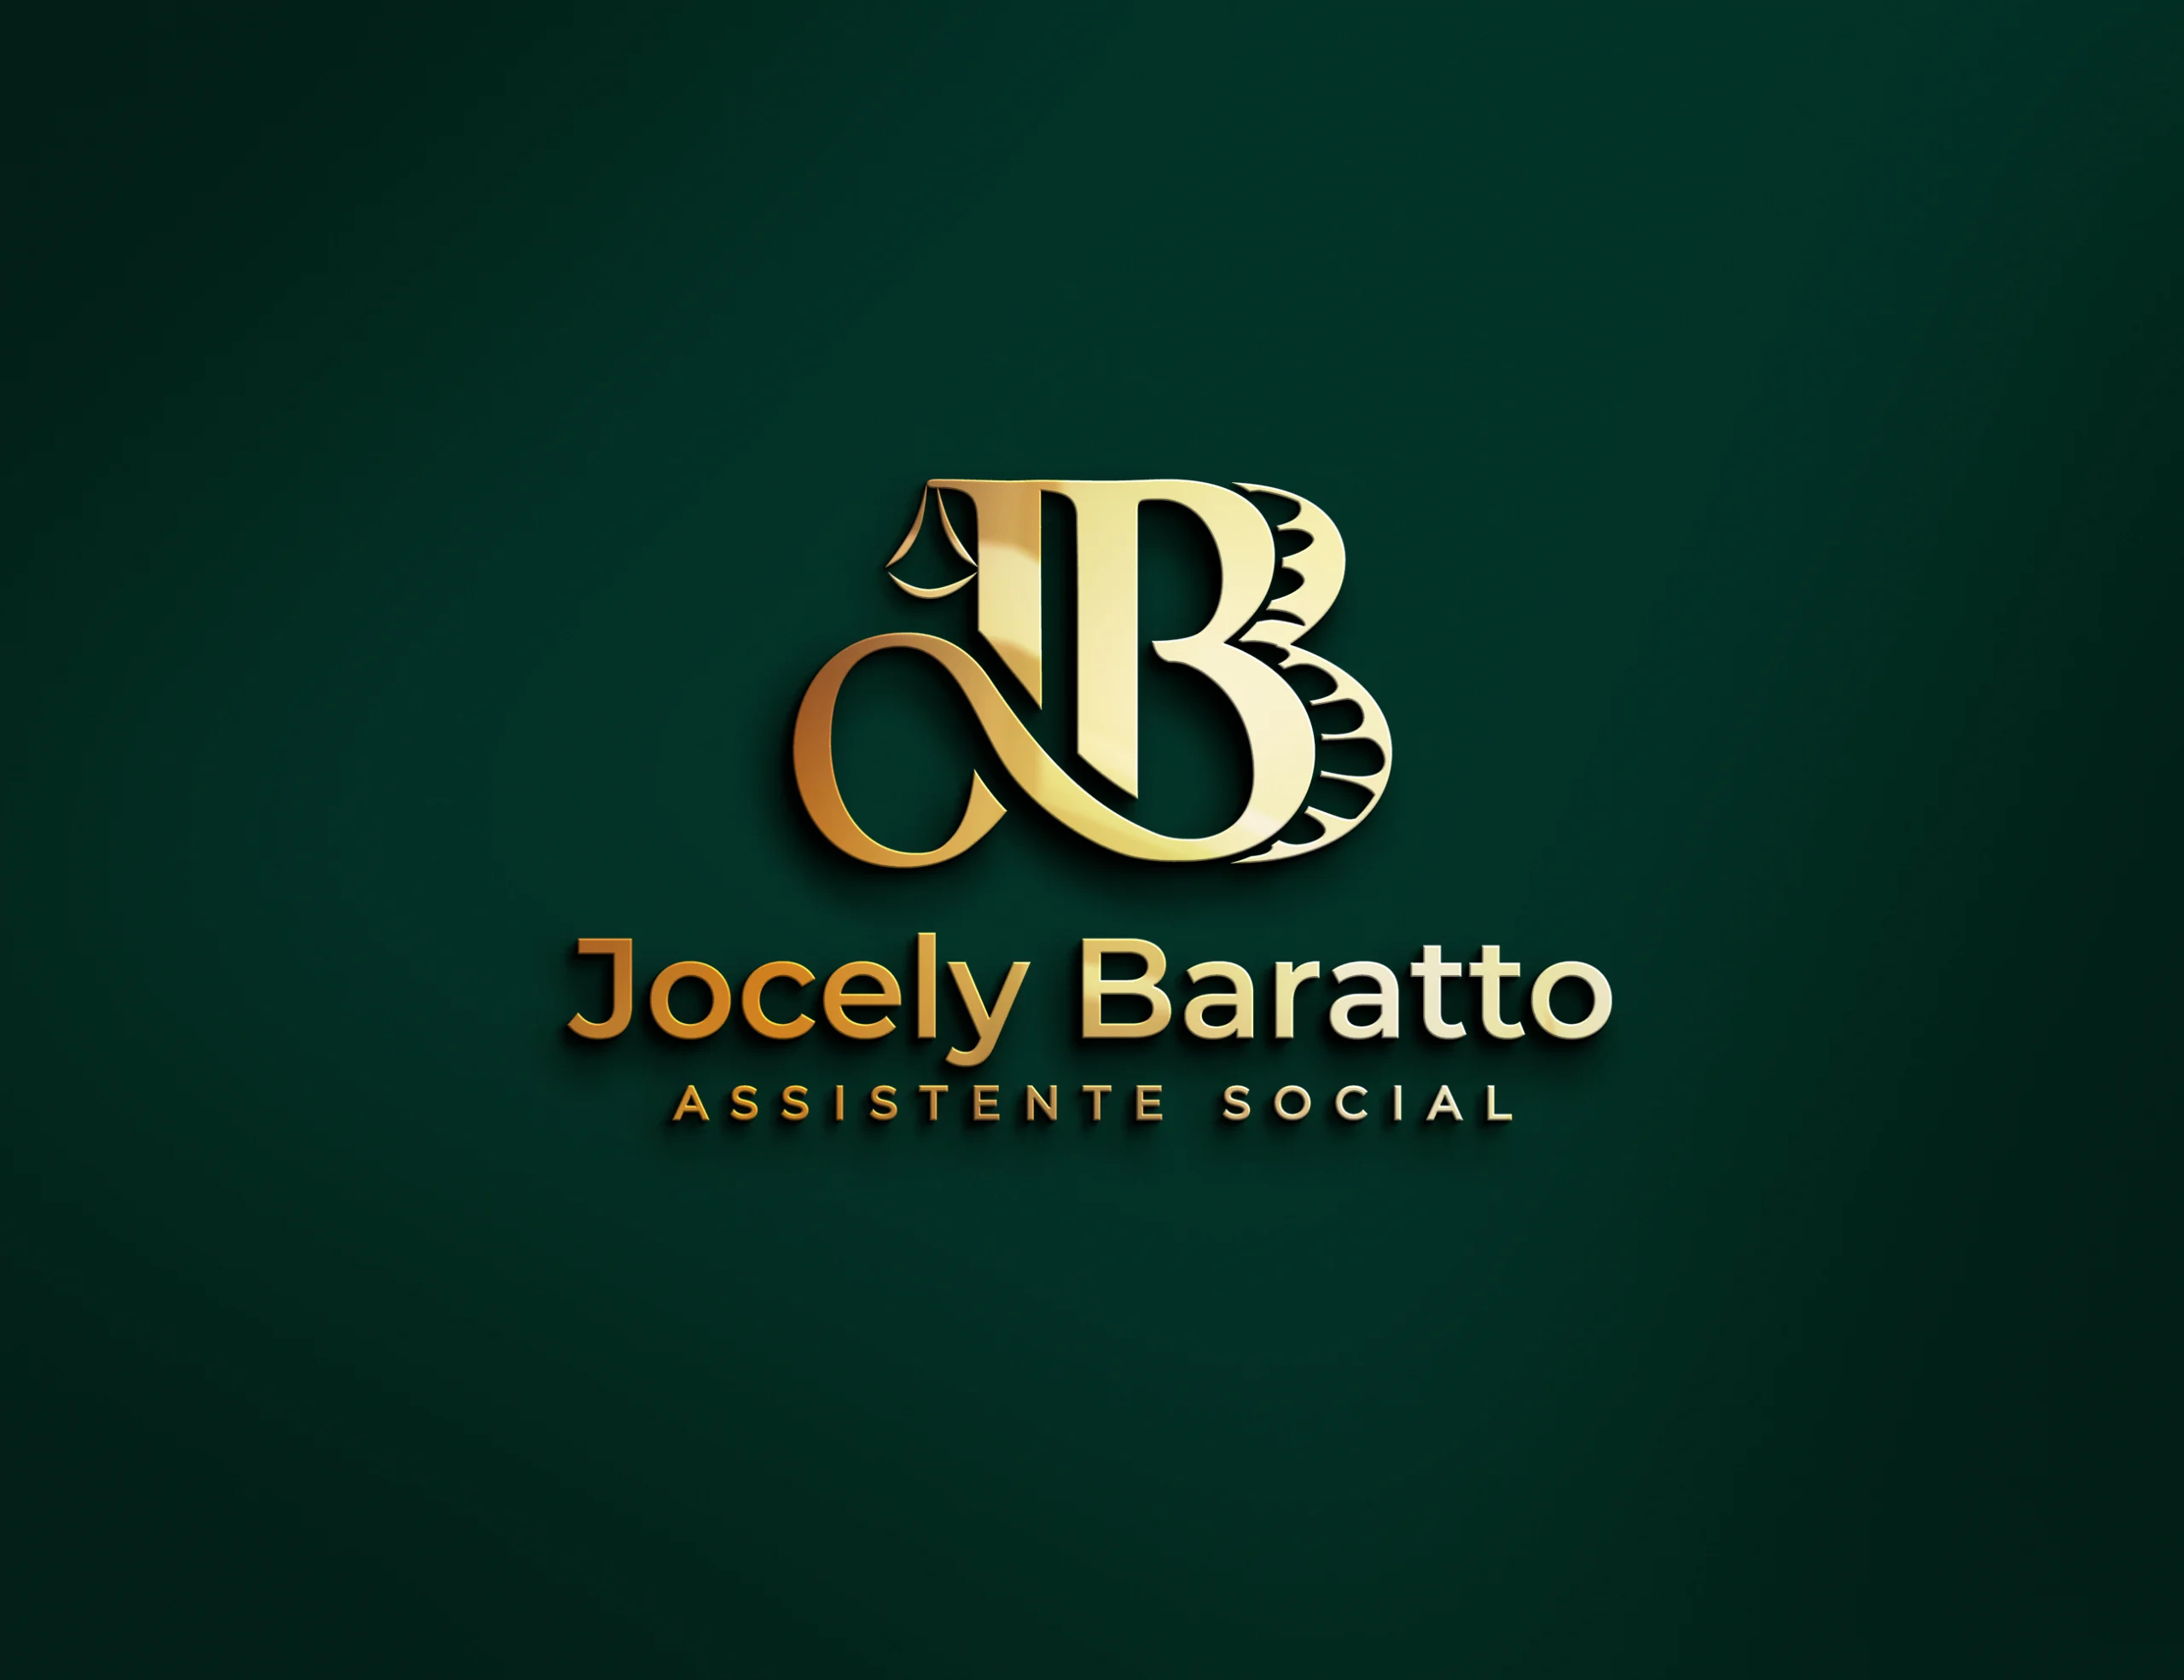 Jocely Baratto